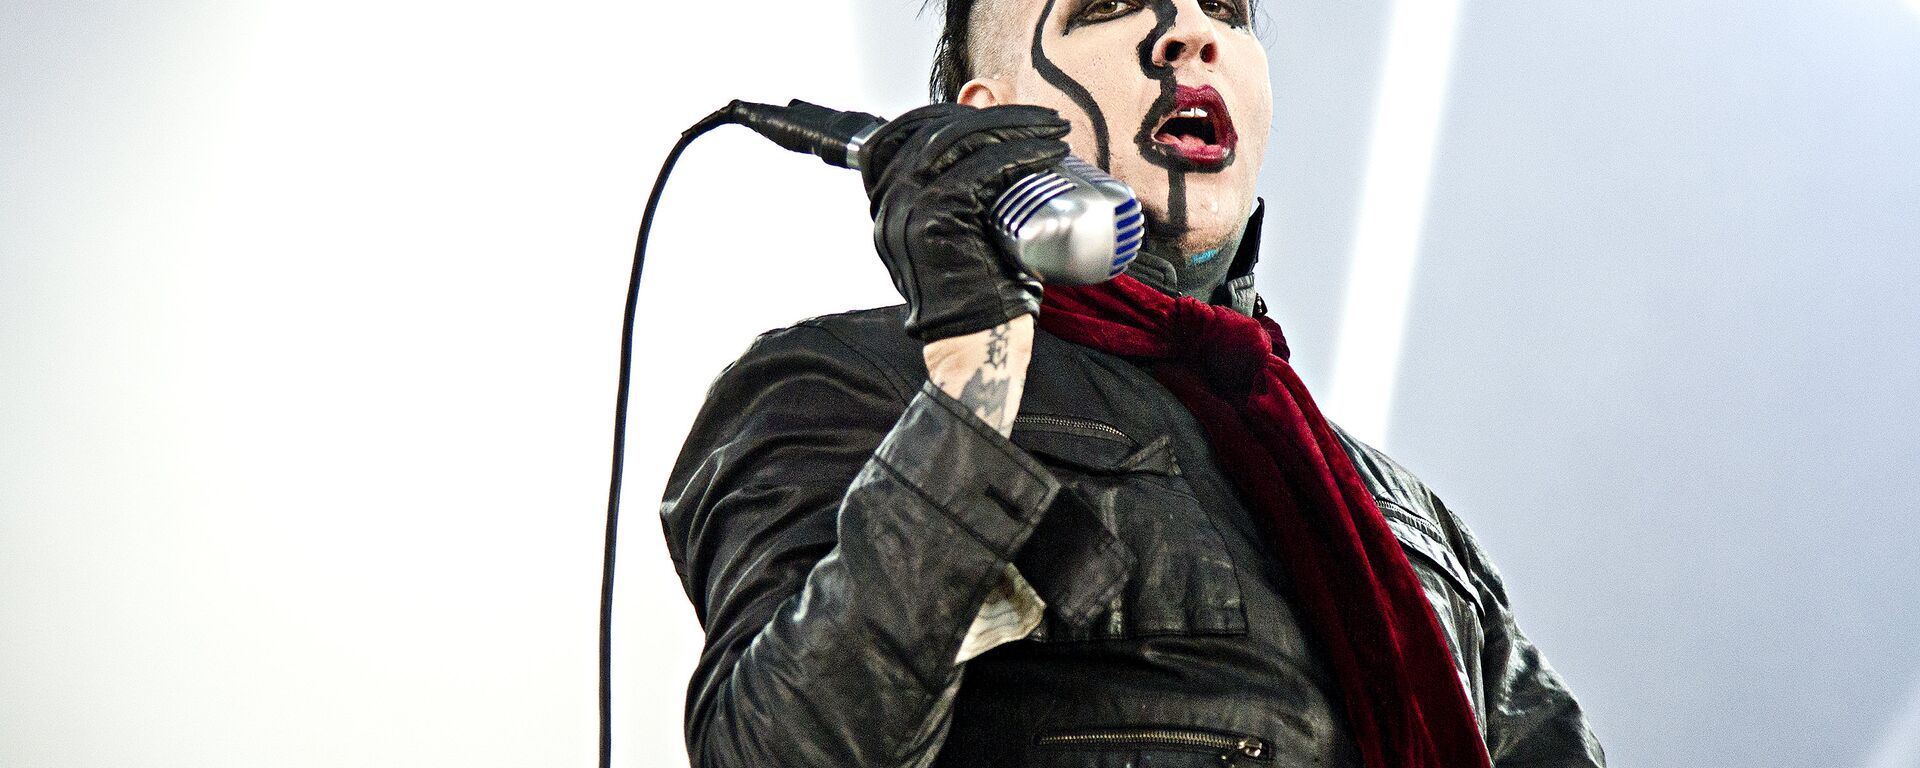 Marilyn Manson performs at Riverbend Music Center on Aug. 8, 2015, in Cincinnati (File) - Sputnik International, 1920, 06.02.2021